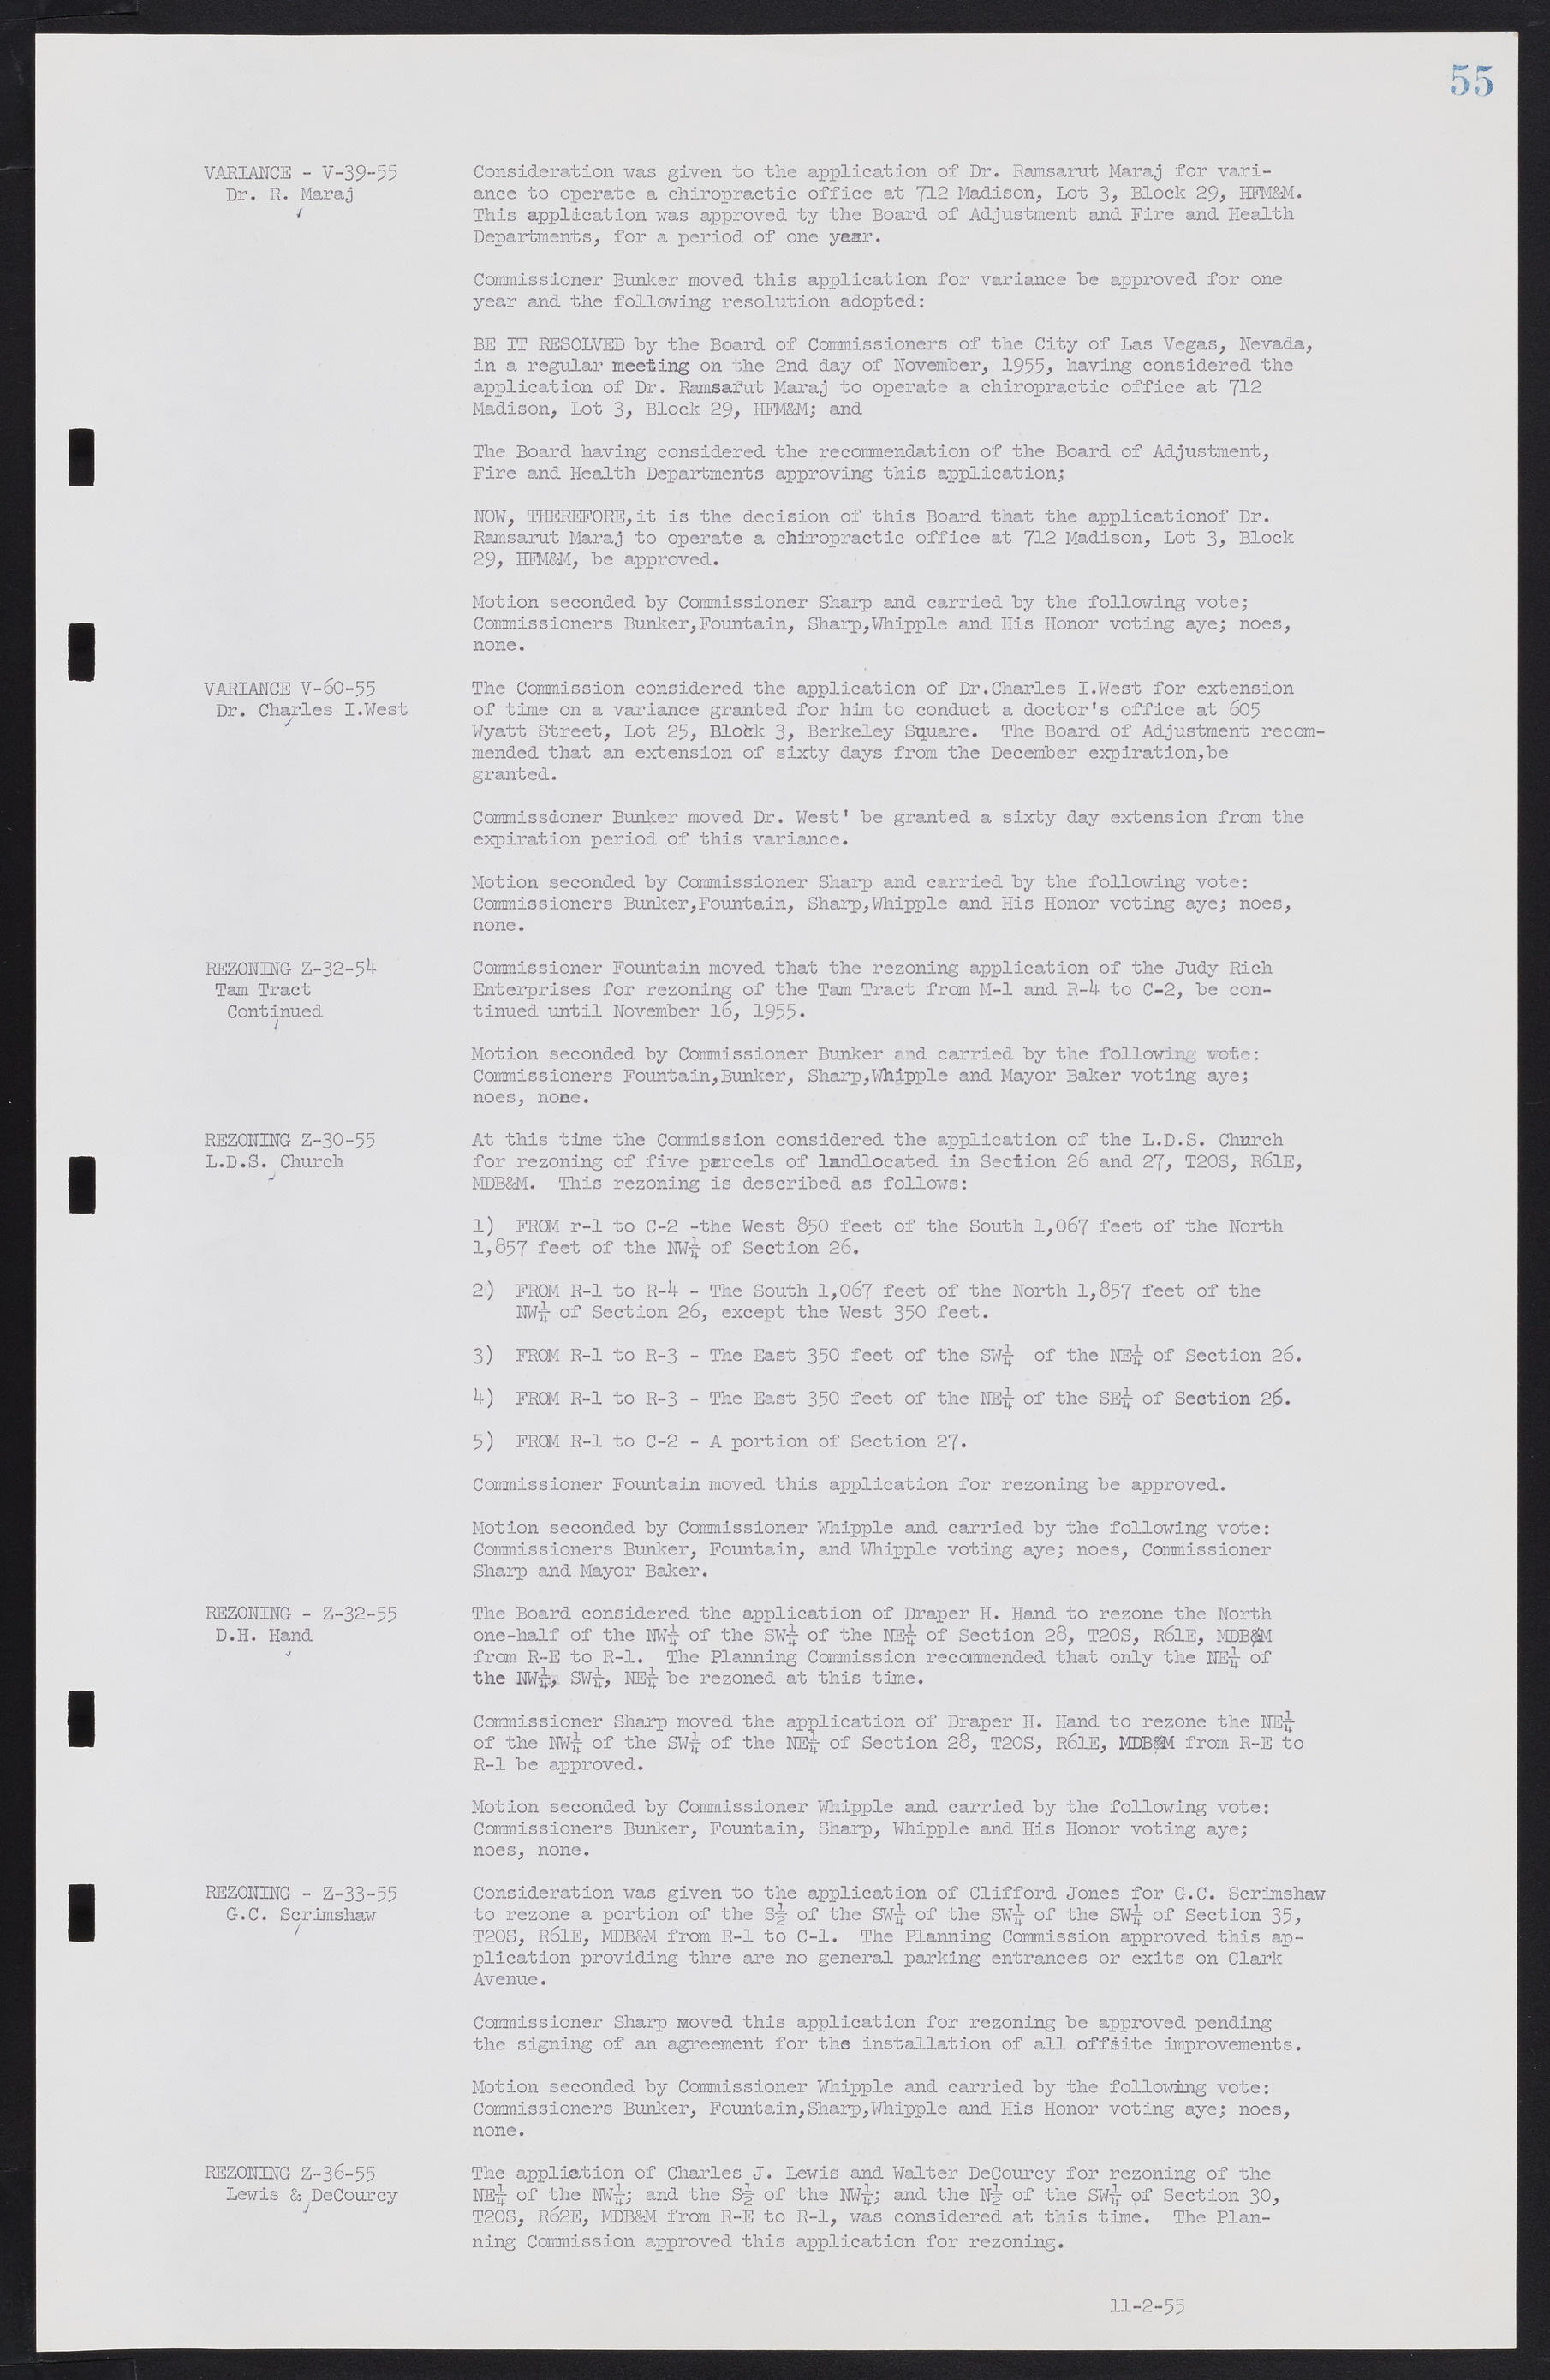 Las Vegas City Commission Minutes, September 21, 1955 to November 20, 1957, lvc000010-63